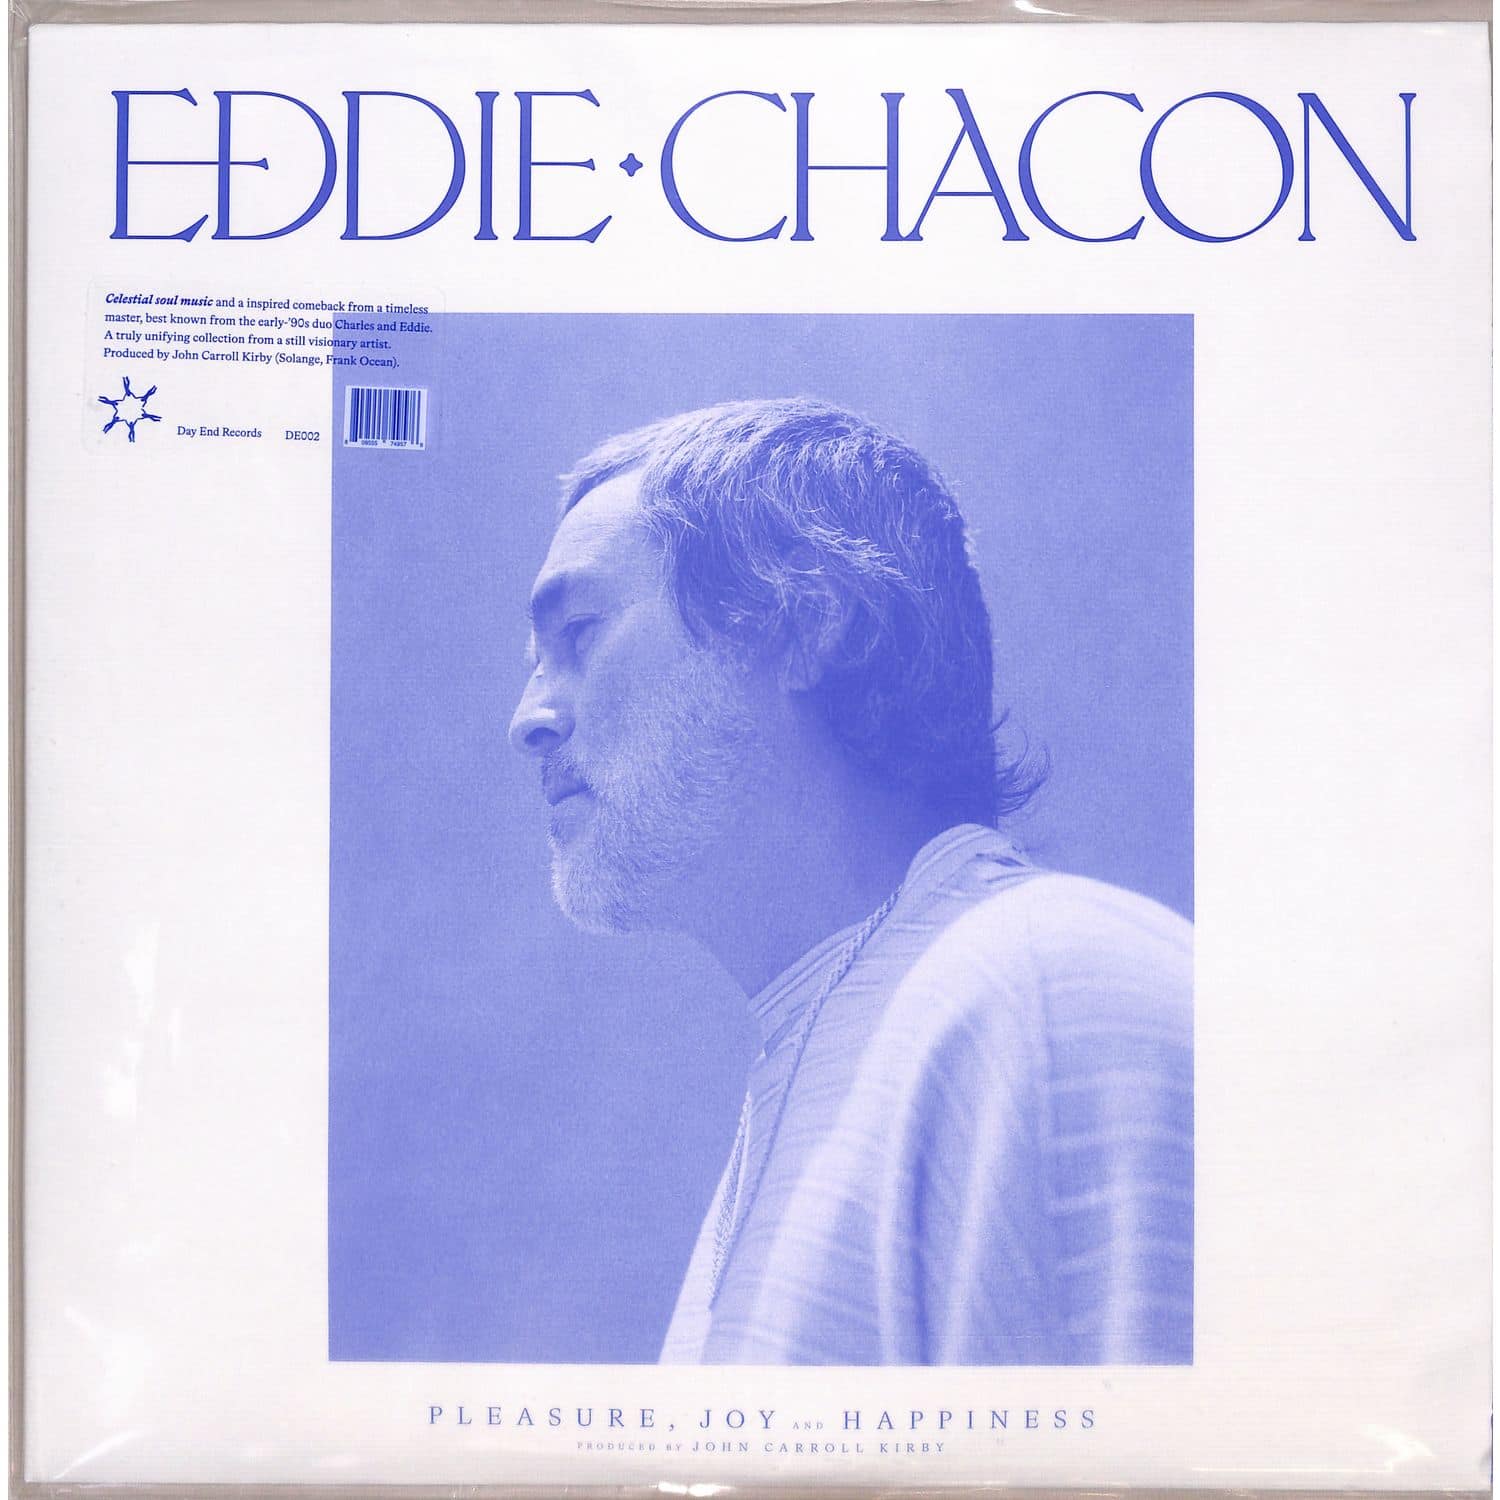 Eddie Chacon - PLEASURE, JOY AND HAPPINESS 